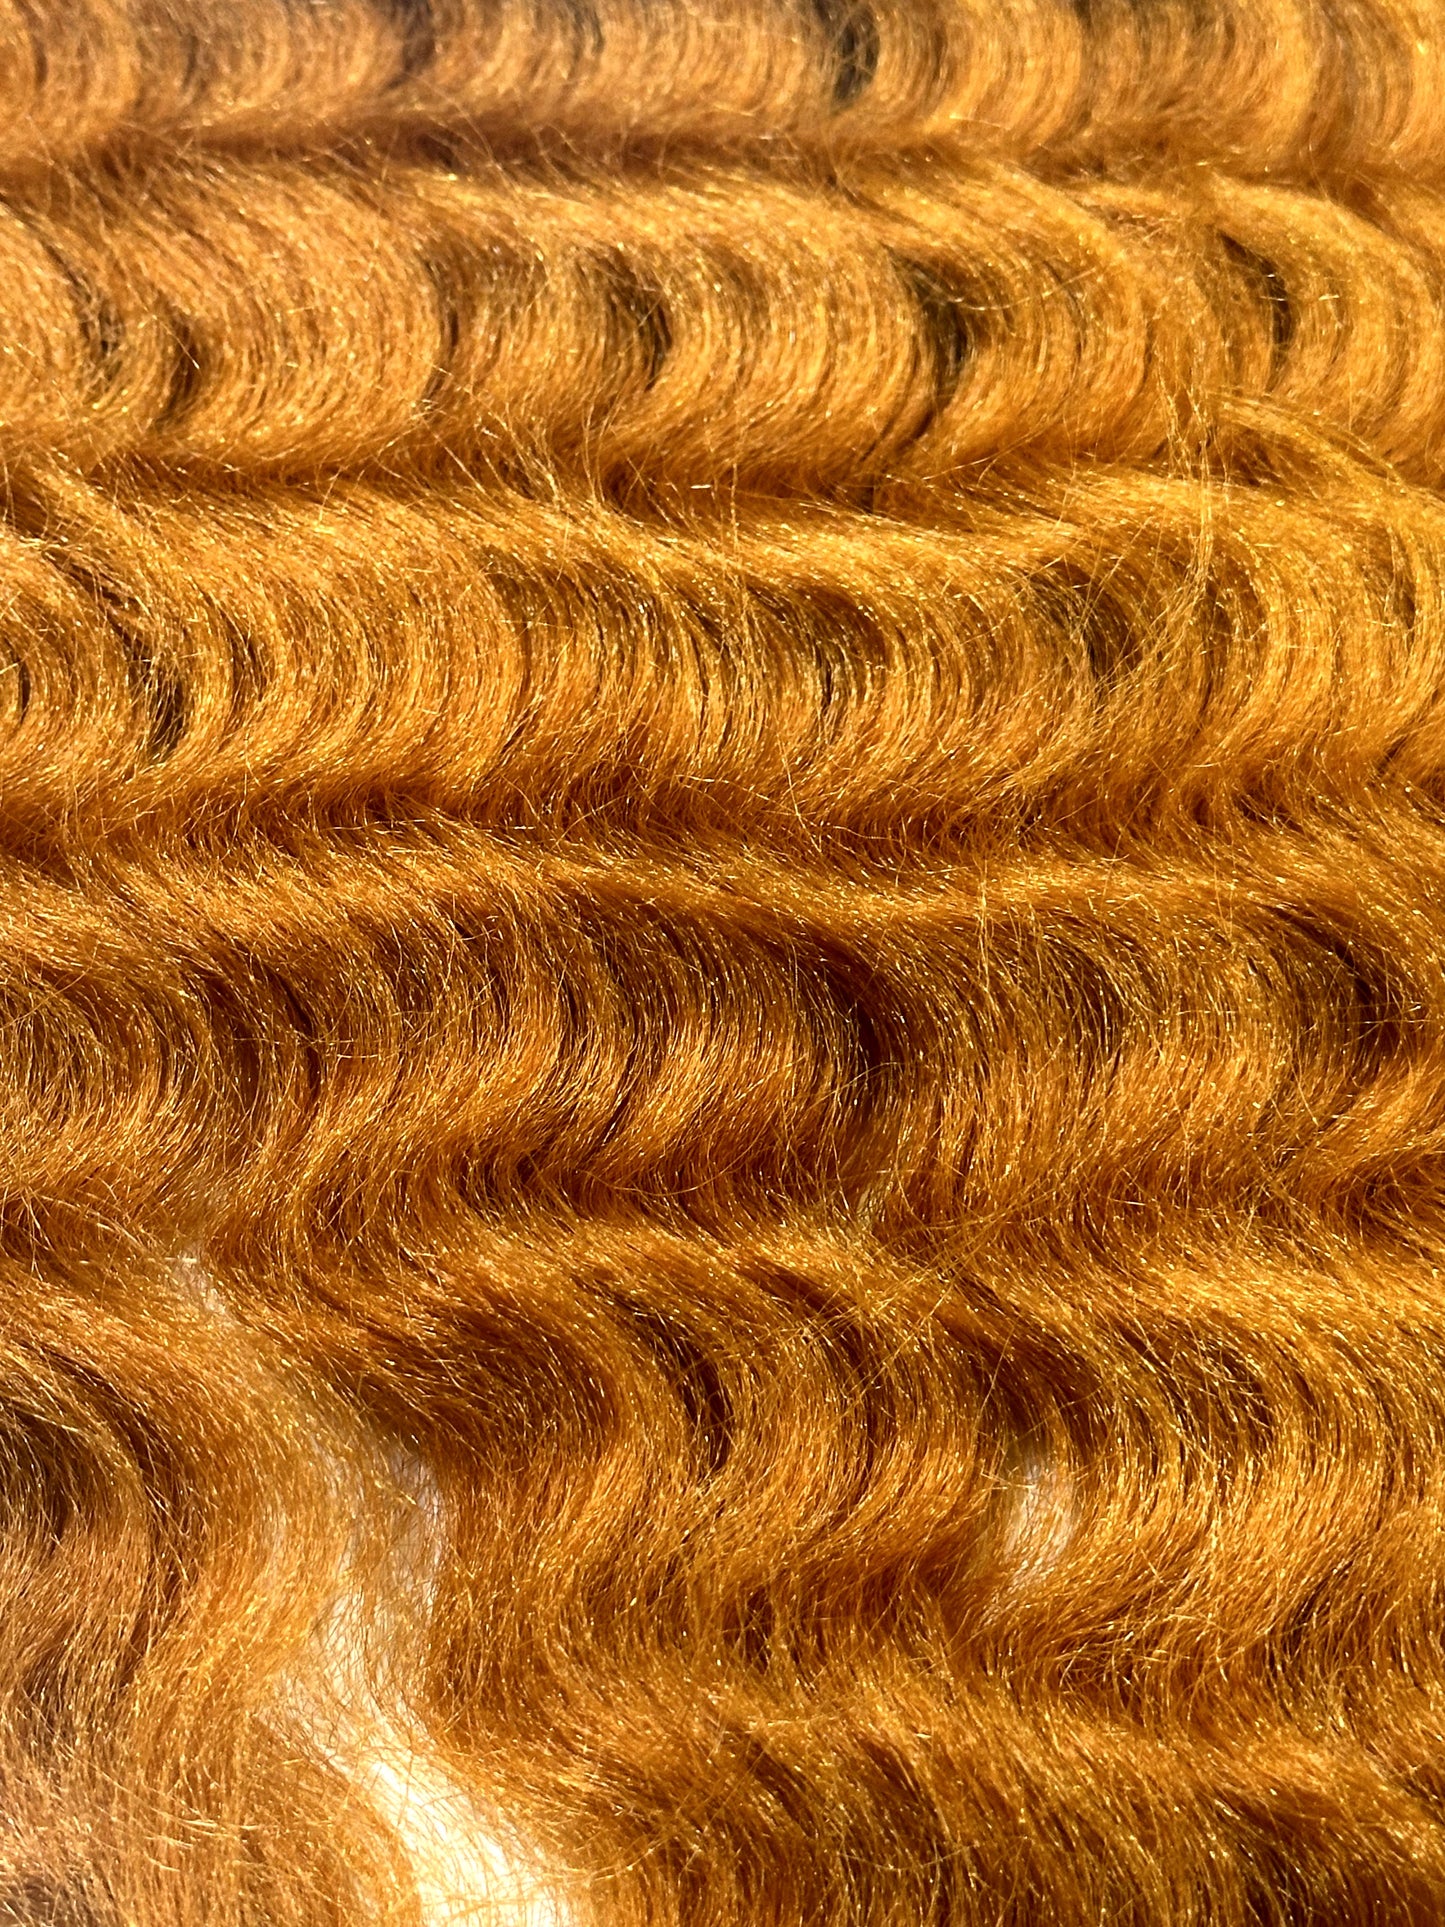 Bobbi Boss King Tips Ocean Wave 28" 3X Pack Braiding Hair Extensions